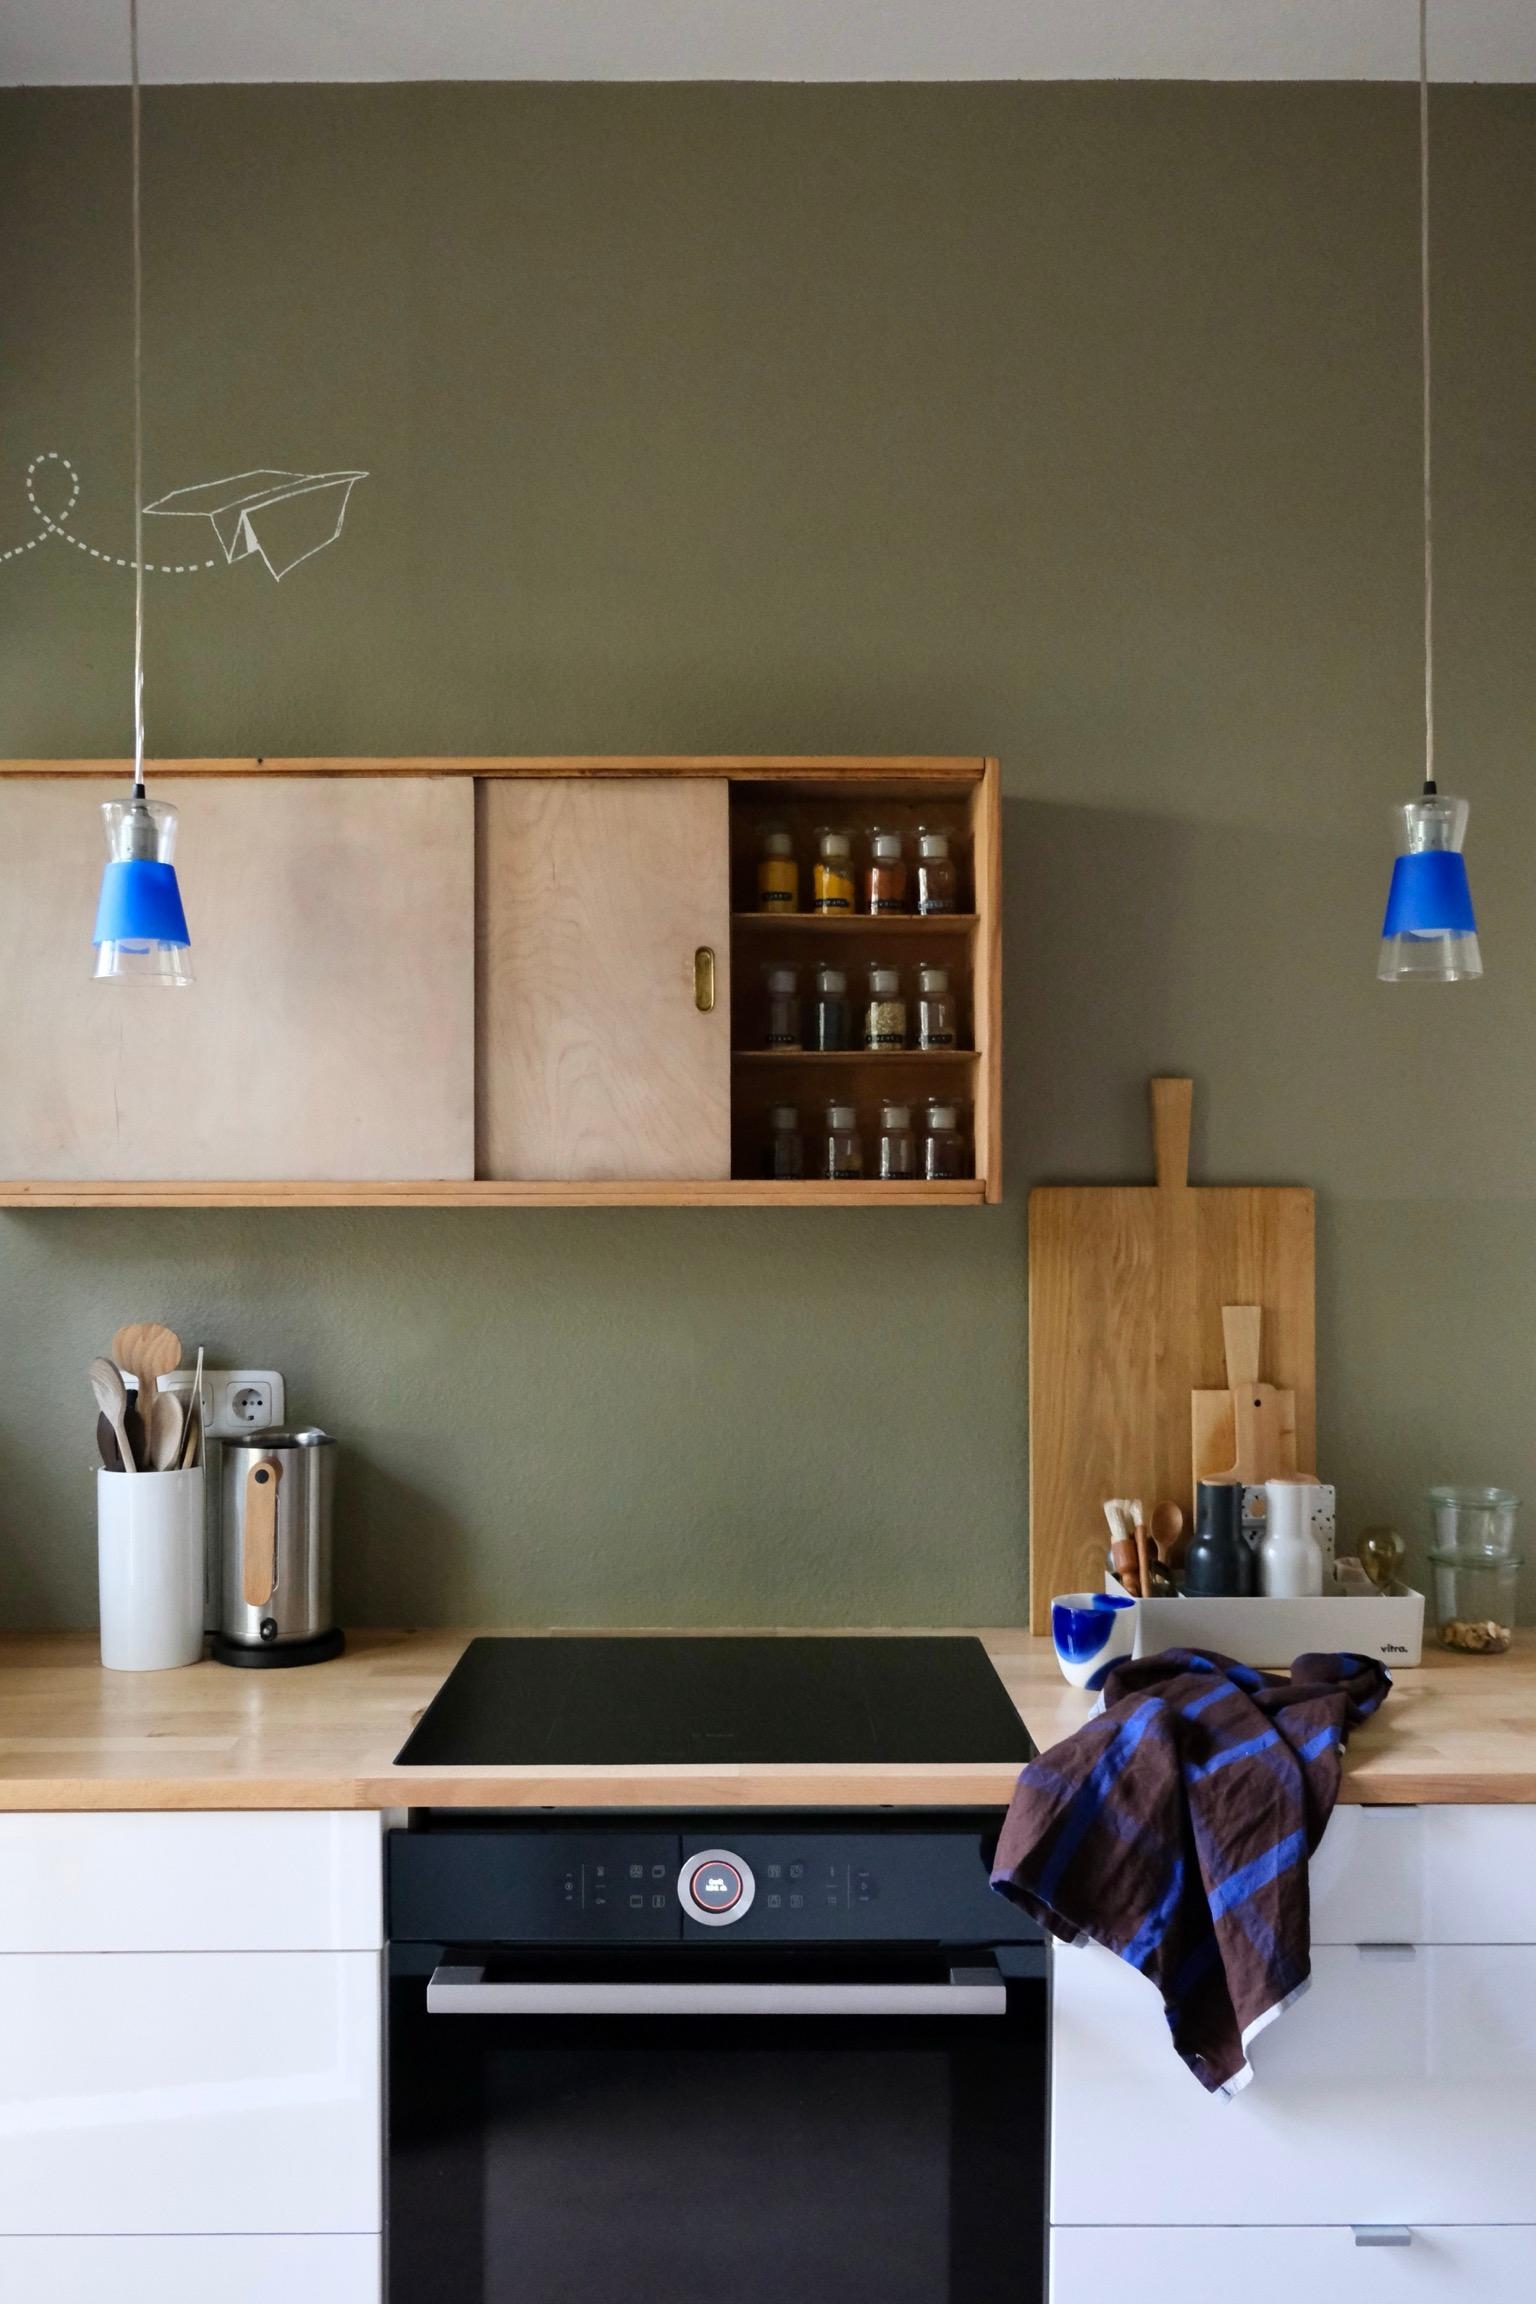 Knallige Farbkleckse in der Küche 💙
#kitcheninspiration #pendantlights